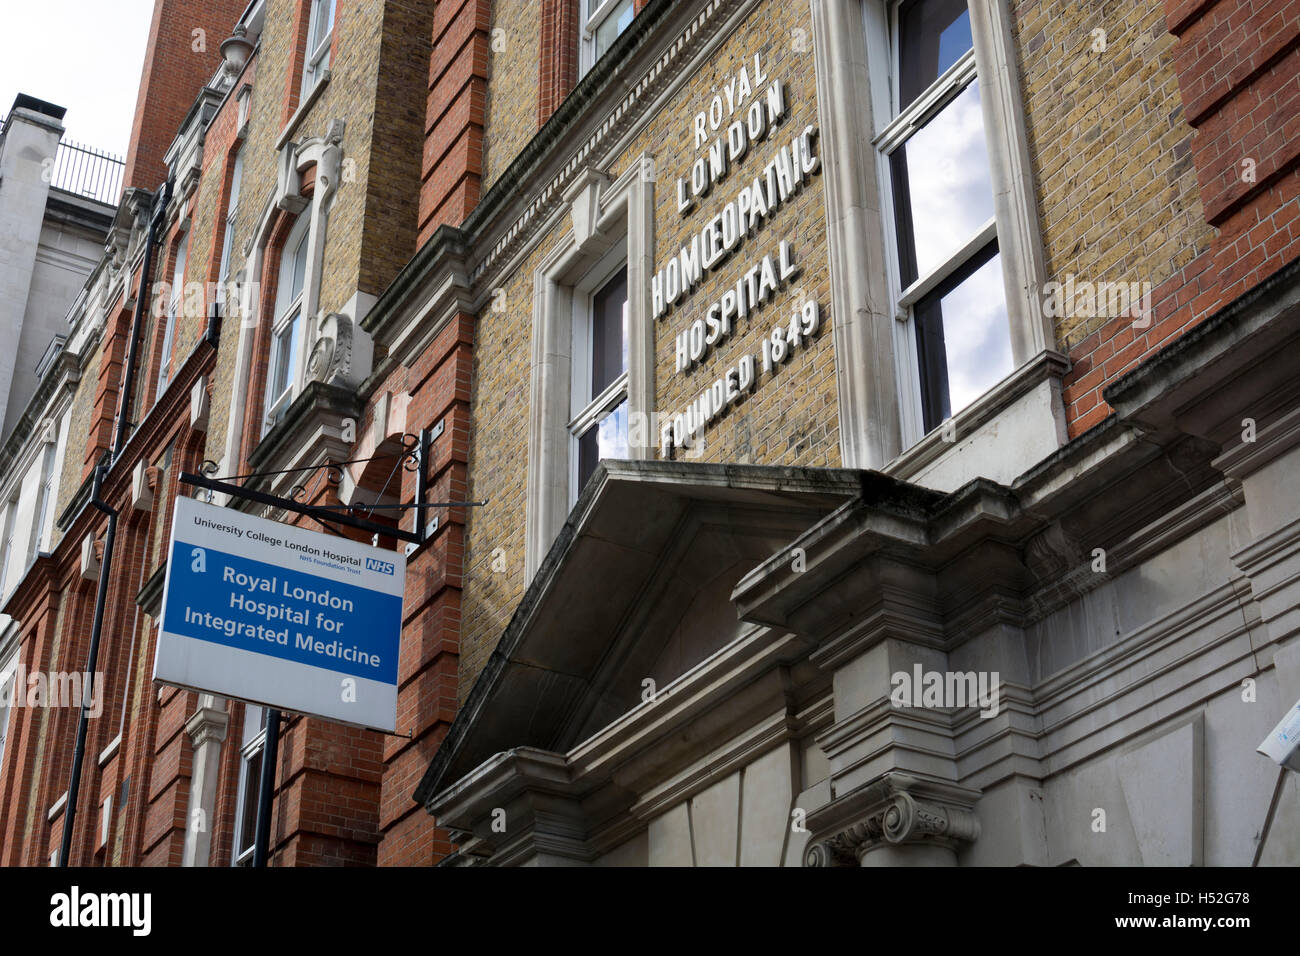 The Royal London Hospital for Integrated Medicine, Great Ormond Street, London, UK Stock Photo